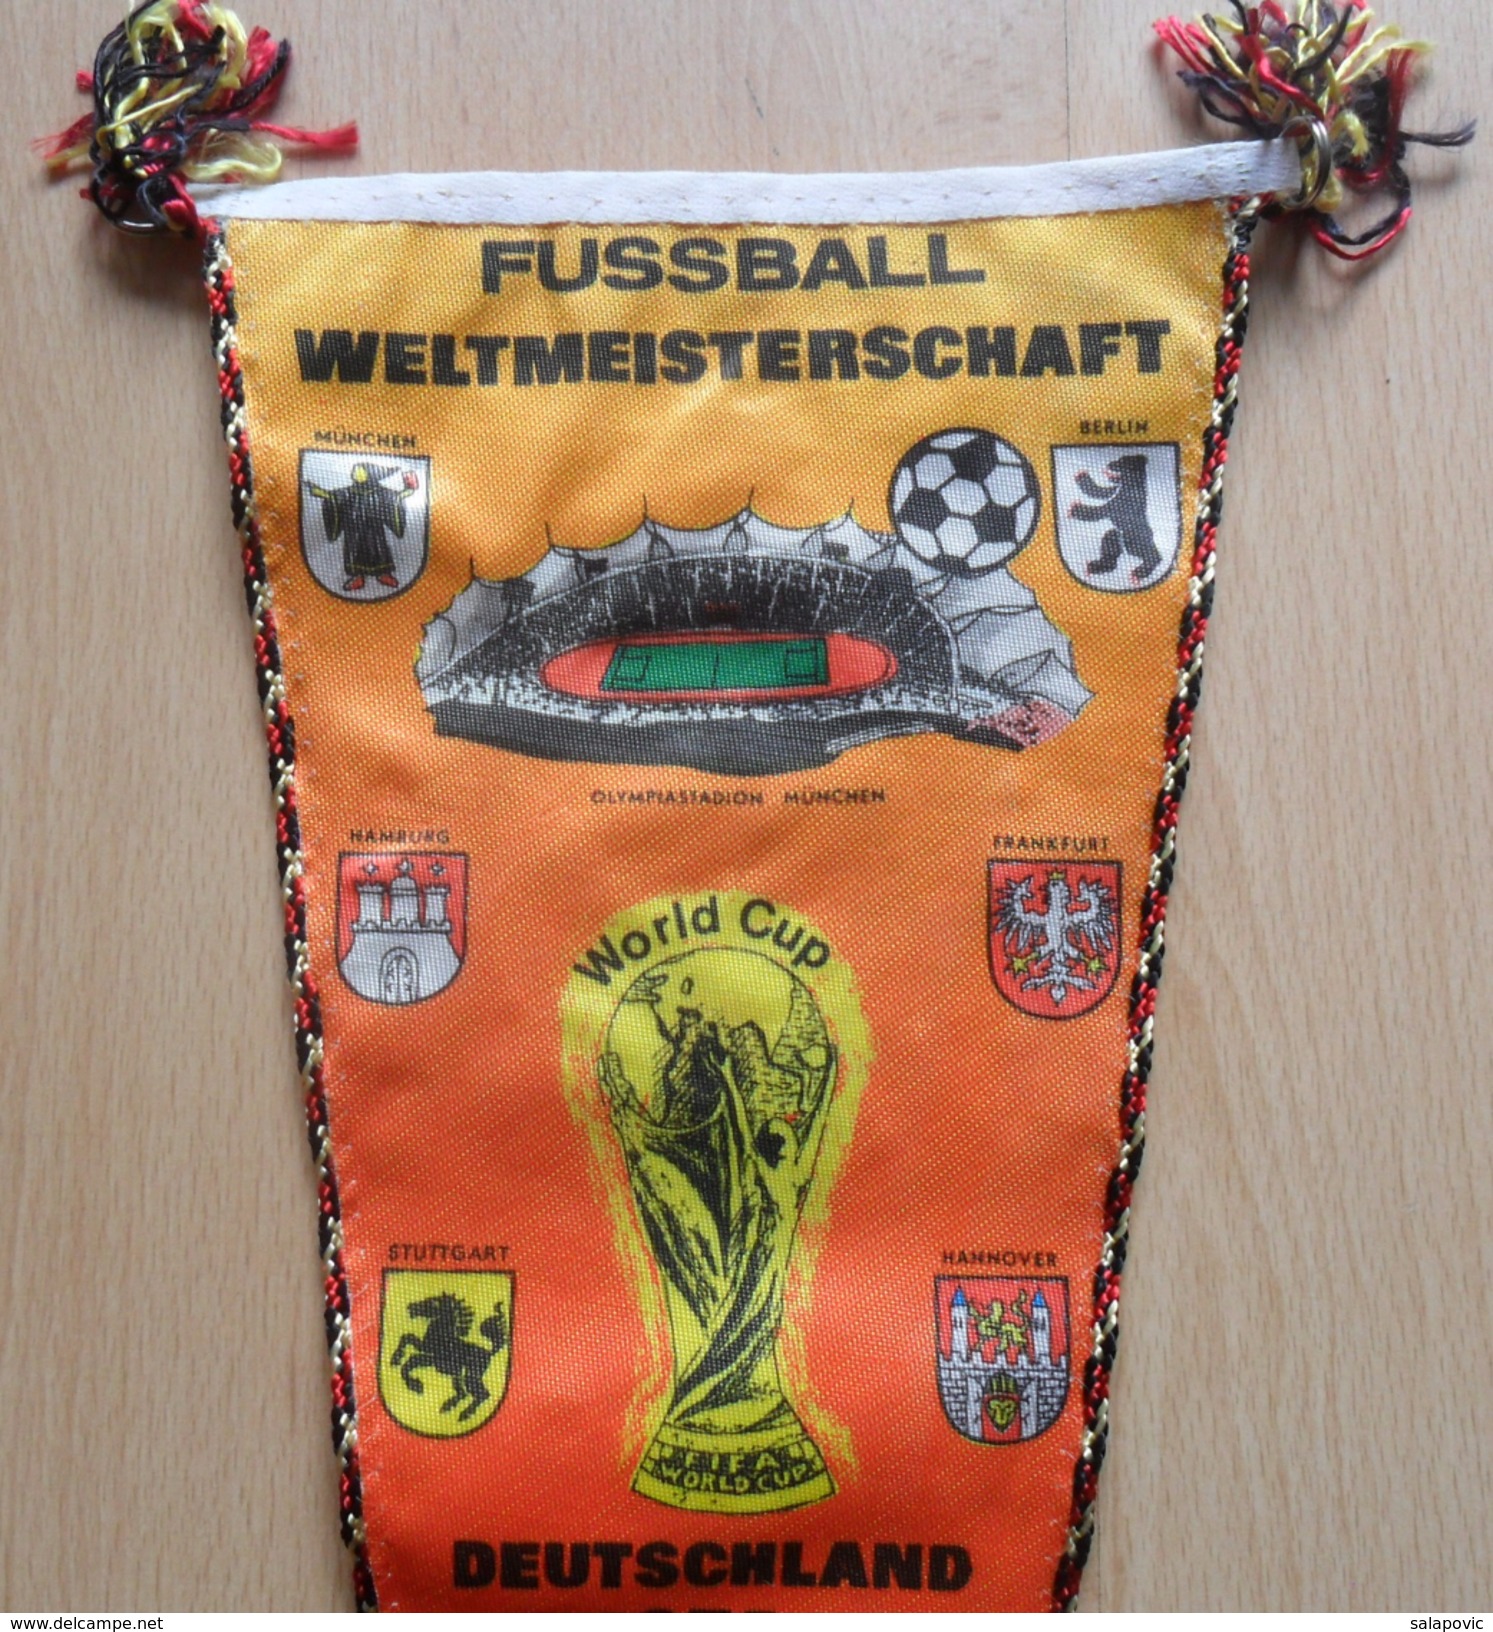 FUßBALL WELTMEISTERSCHAFT DEUTSCHLAND 1974, FOOTBALL WORLD CHAMPIONSHIP GERMANY 1974 OLD PENNANT - Apparel, Souvenirs & Other